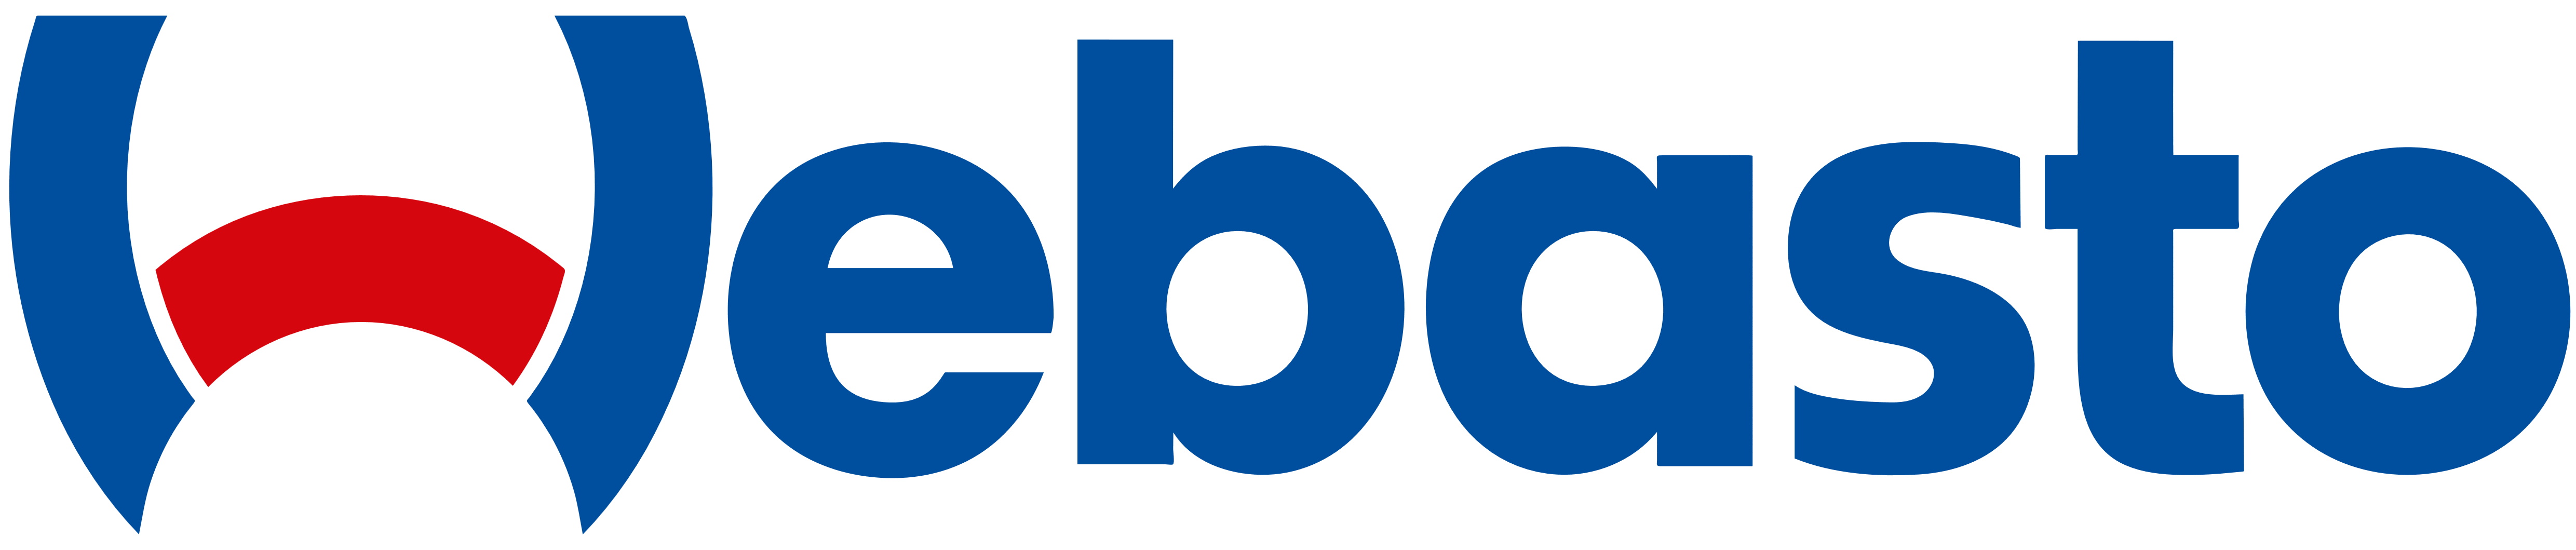 Webasto logo logotype